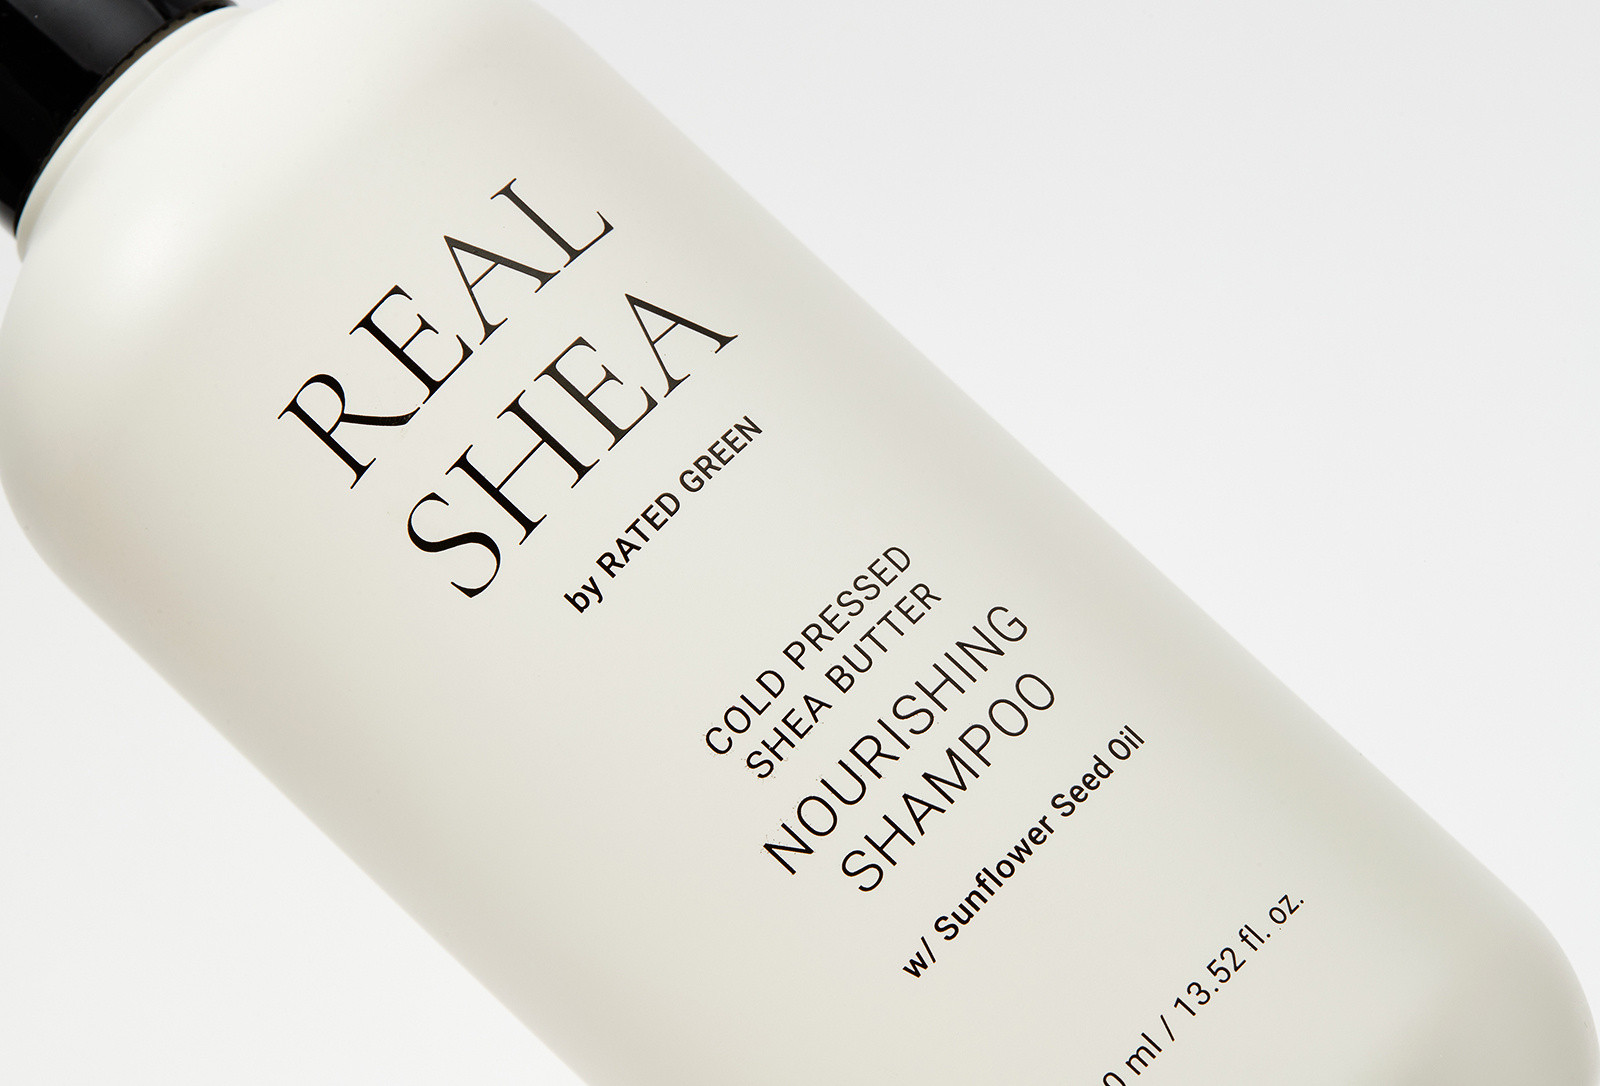 Поживний шампунь для волосся з маслом ши Rated Green Real Shea Nourishing Shampoo